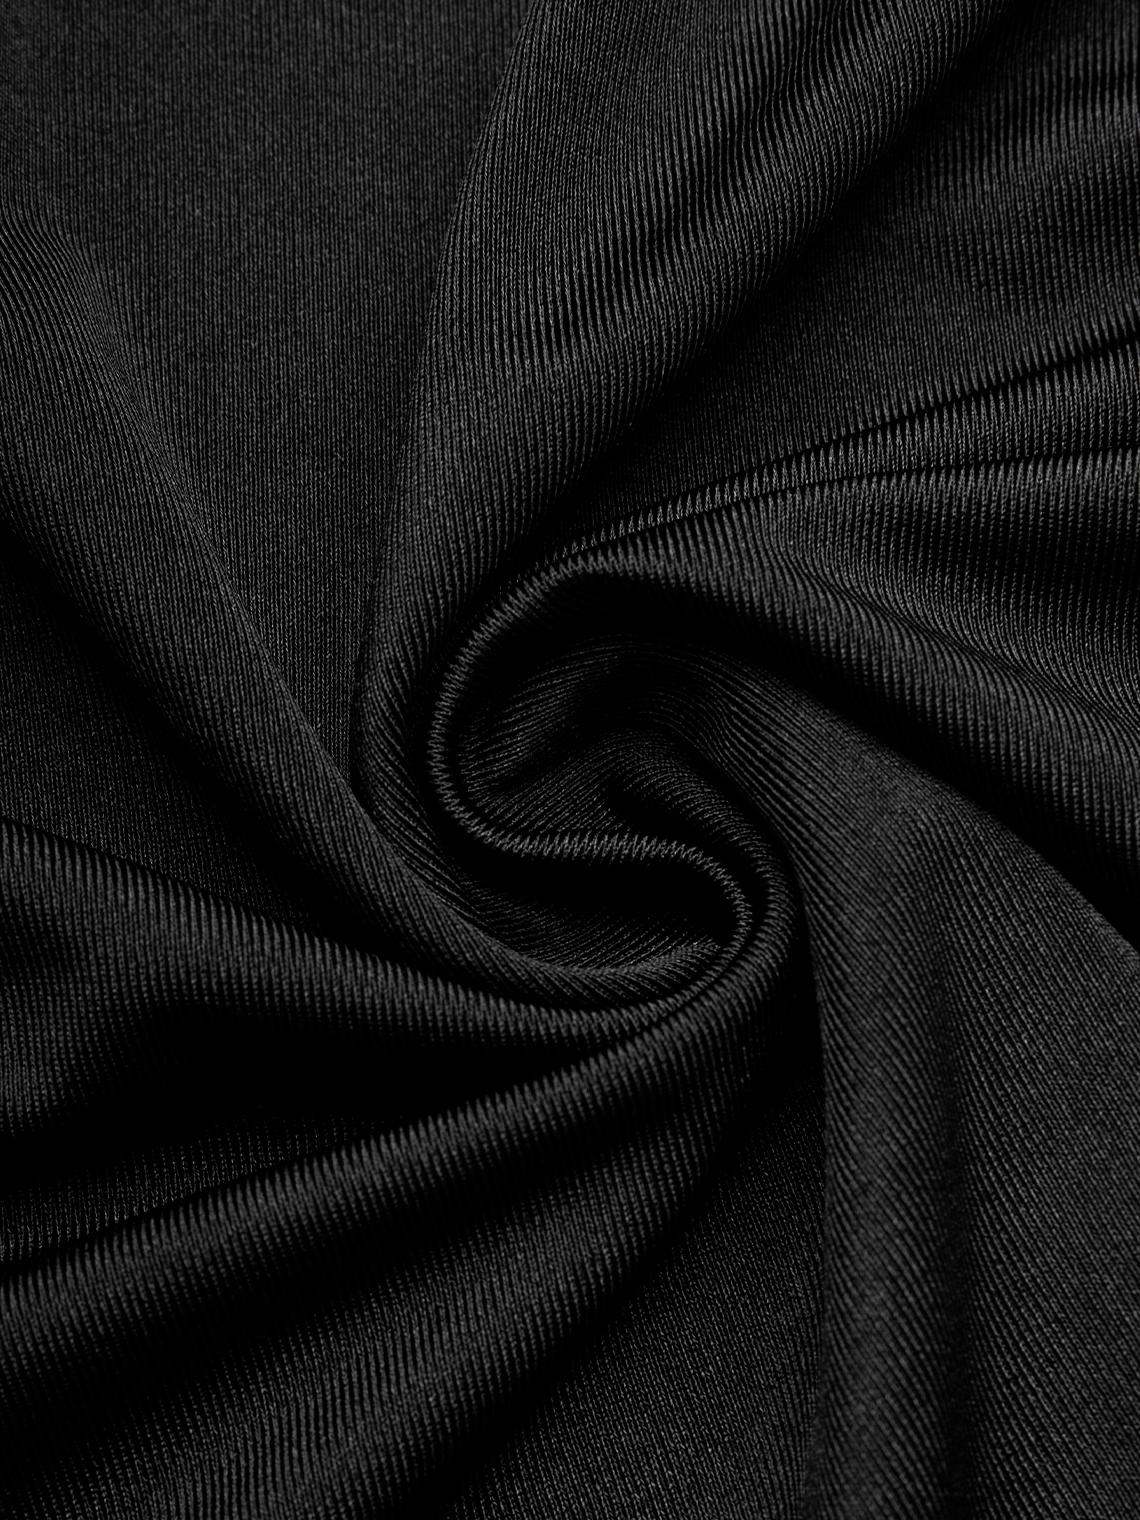 【Final Sale】Edgy Black Backless Design Bodysuit